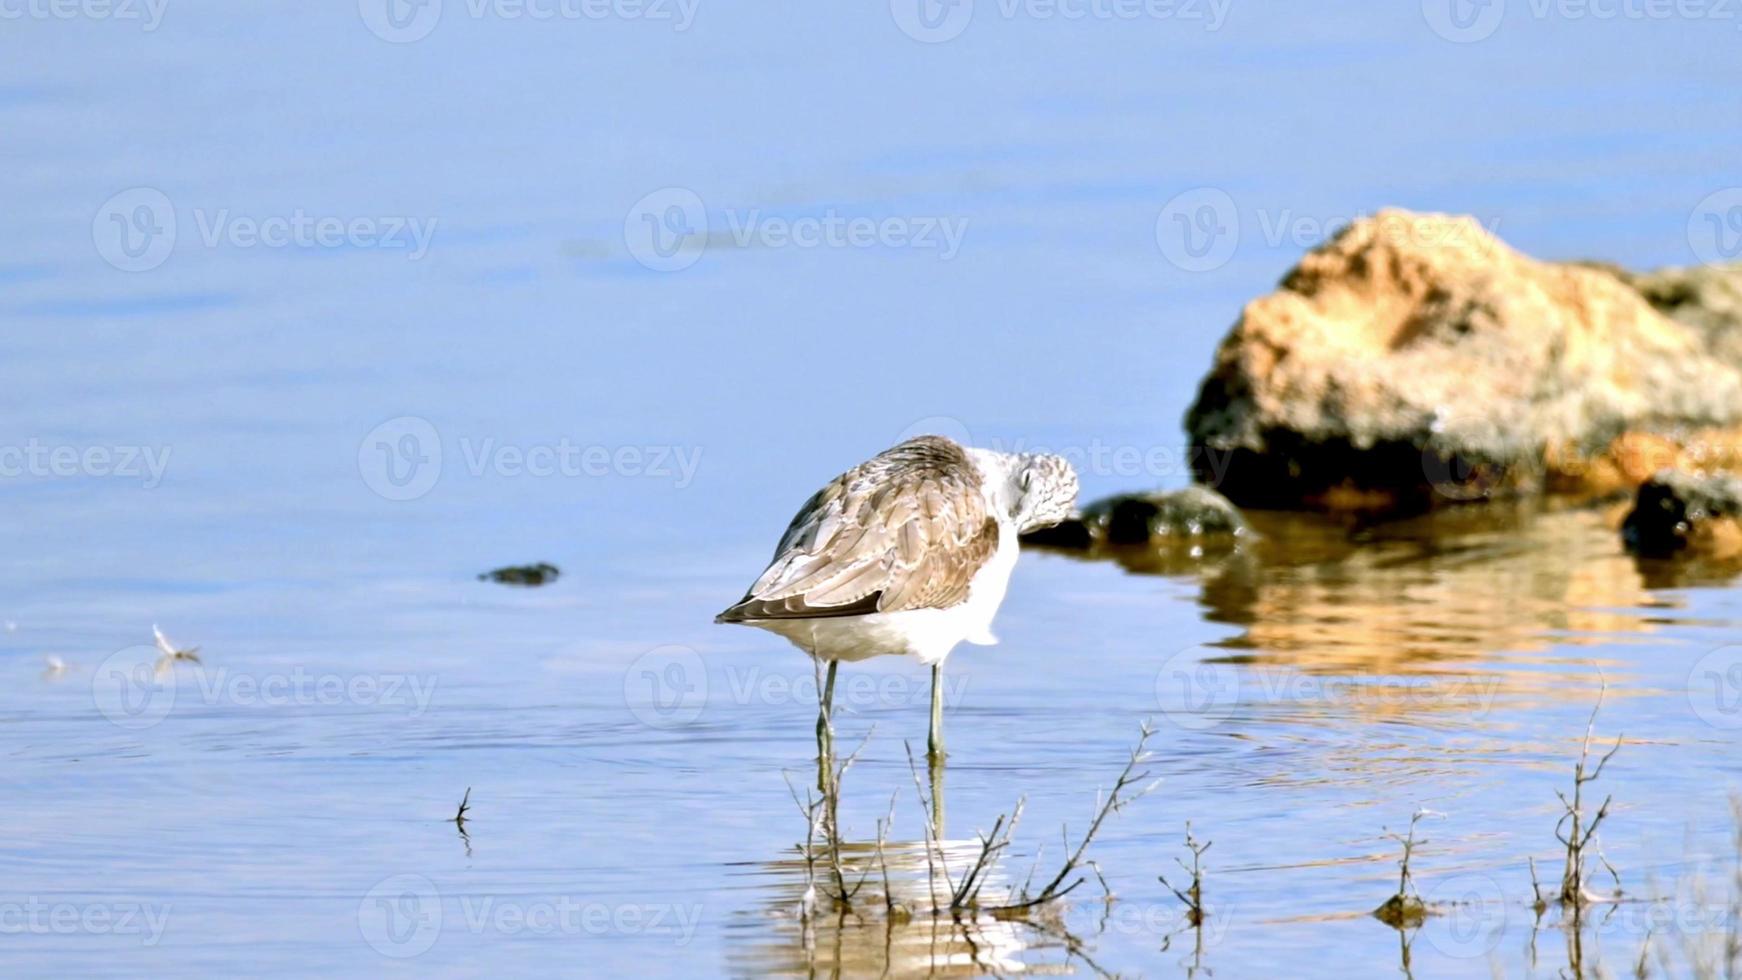 sjöfågel, grönfotad vadare, matning i salt sjö foto